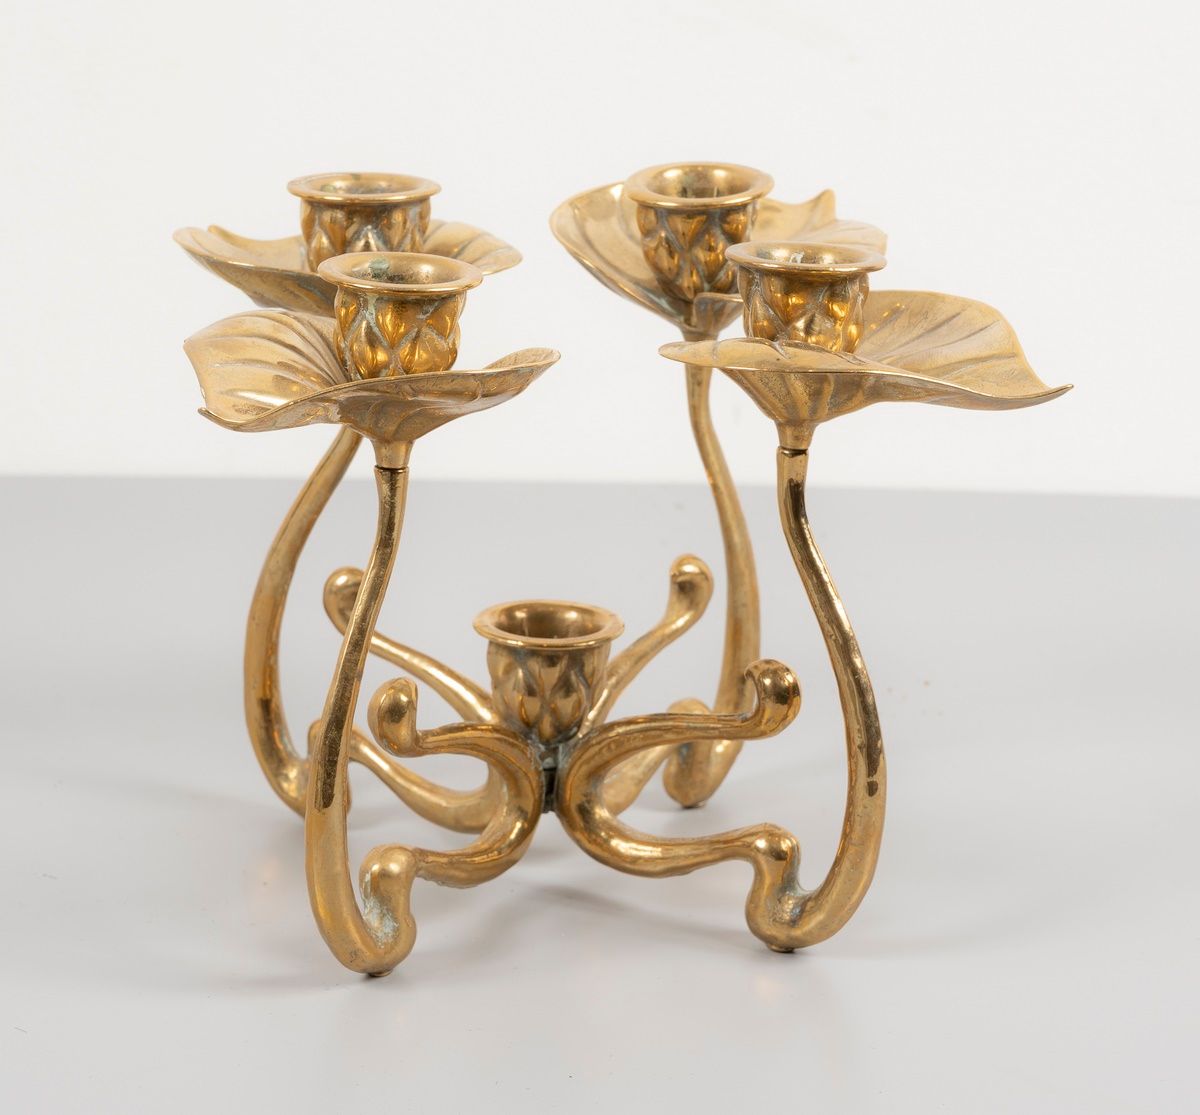 Null 青铜烛台，有四个灯。

新艺术主义风格。

在弗朗索瓦-格扎维埃-拉兰内（1927 - 2008）的品味中。